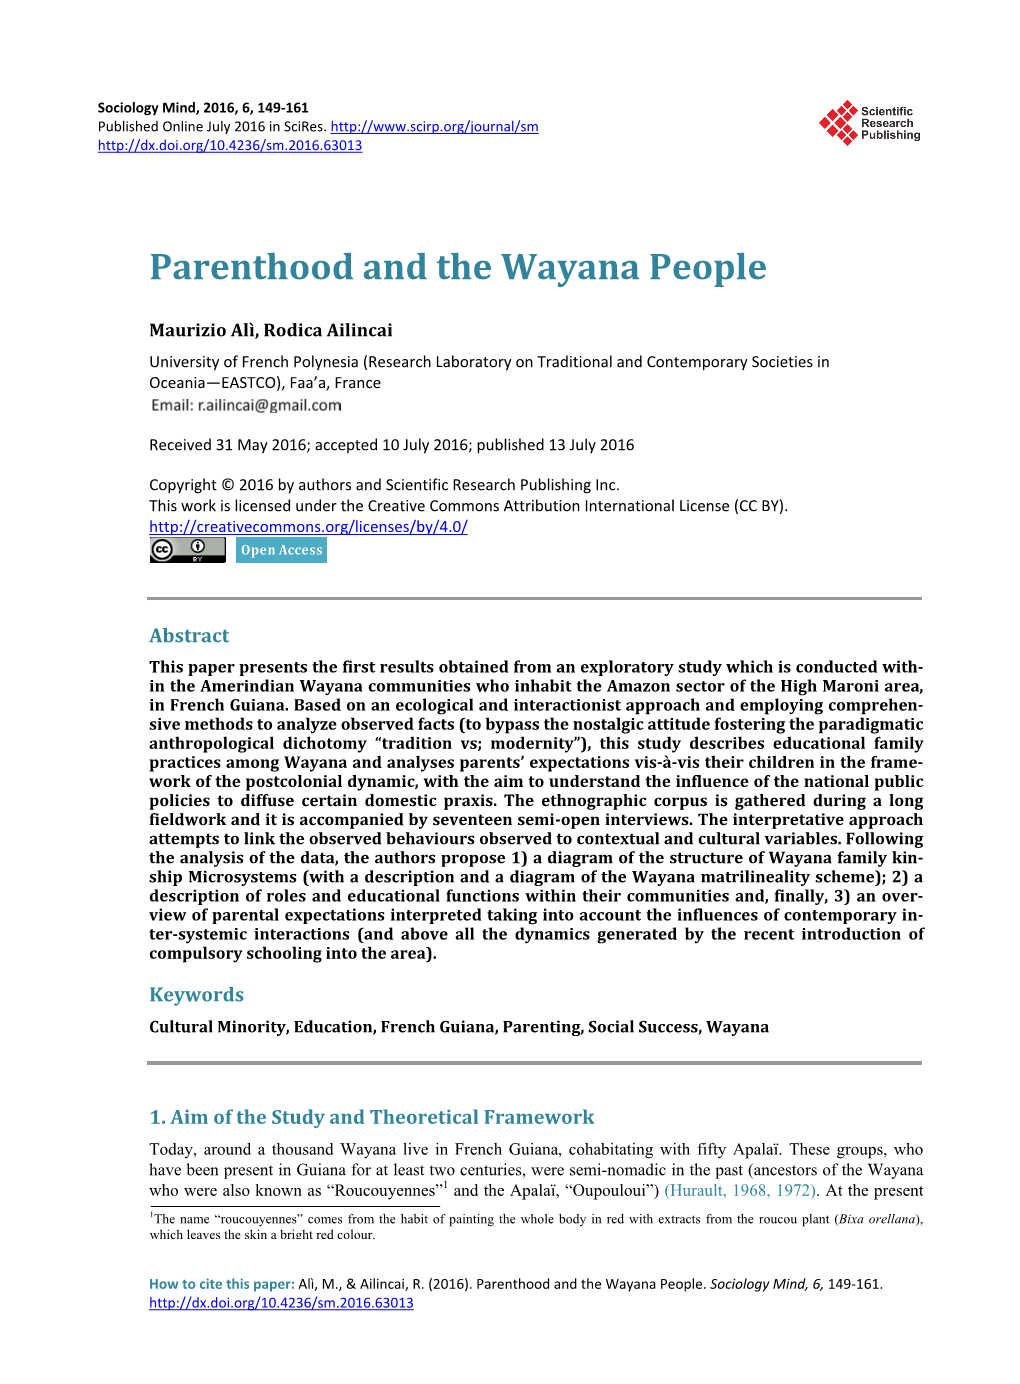 Parenthood and the Wayana People